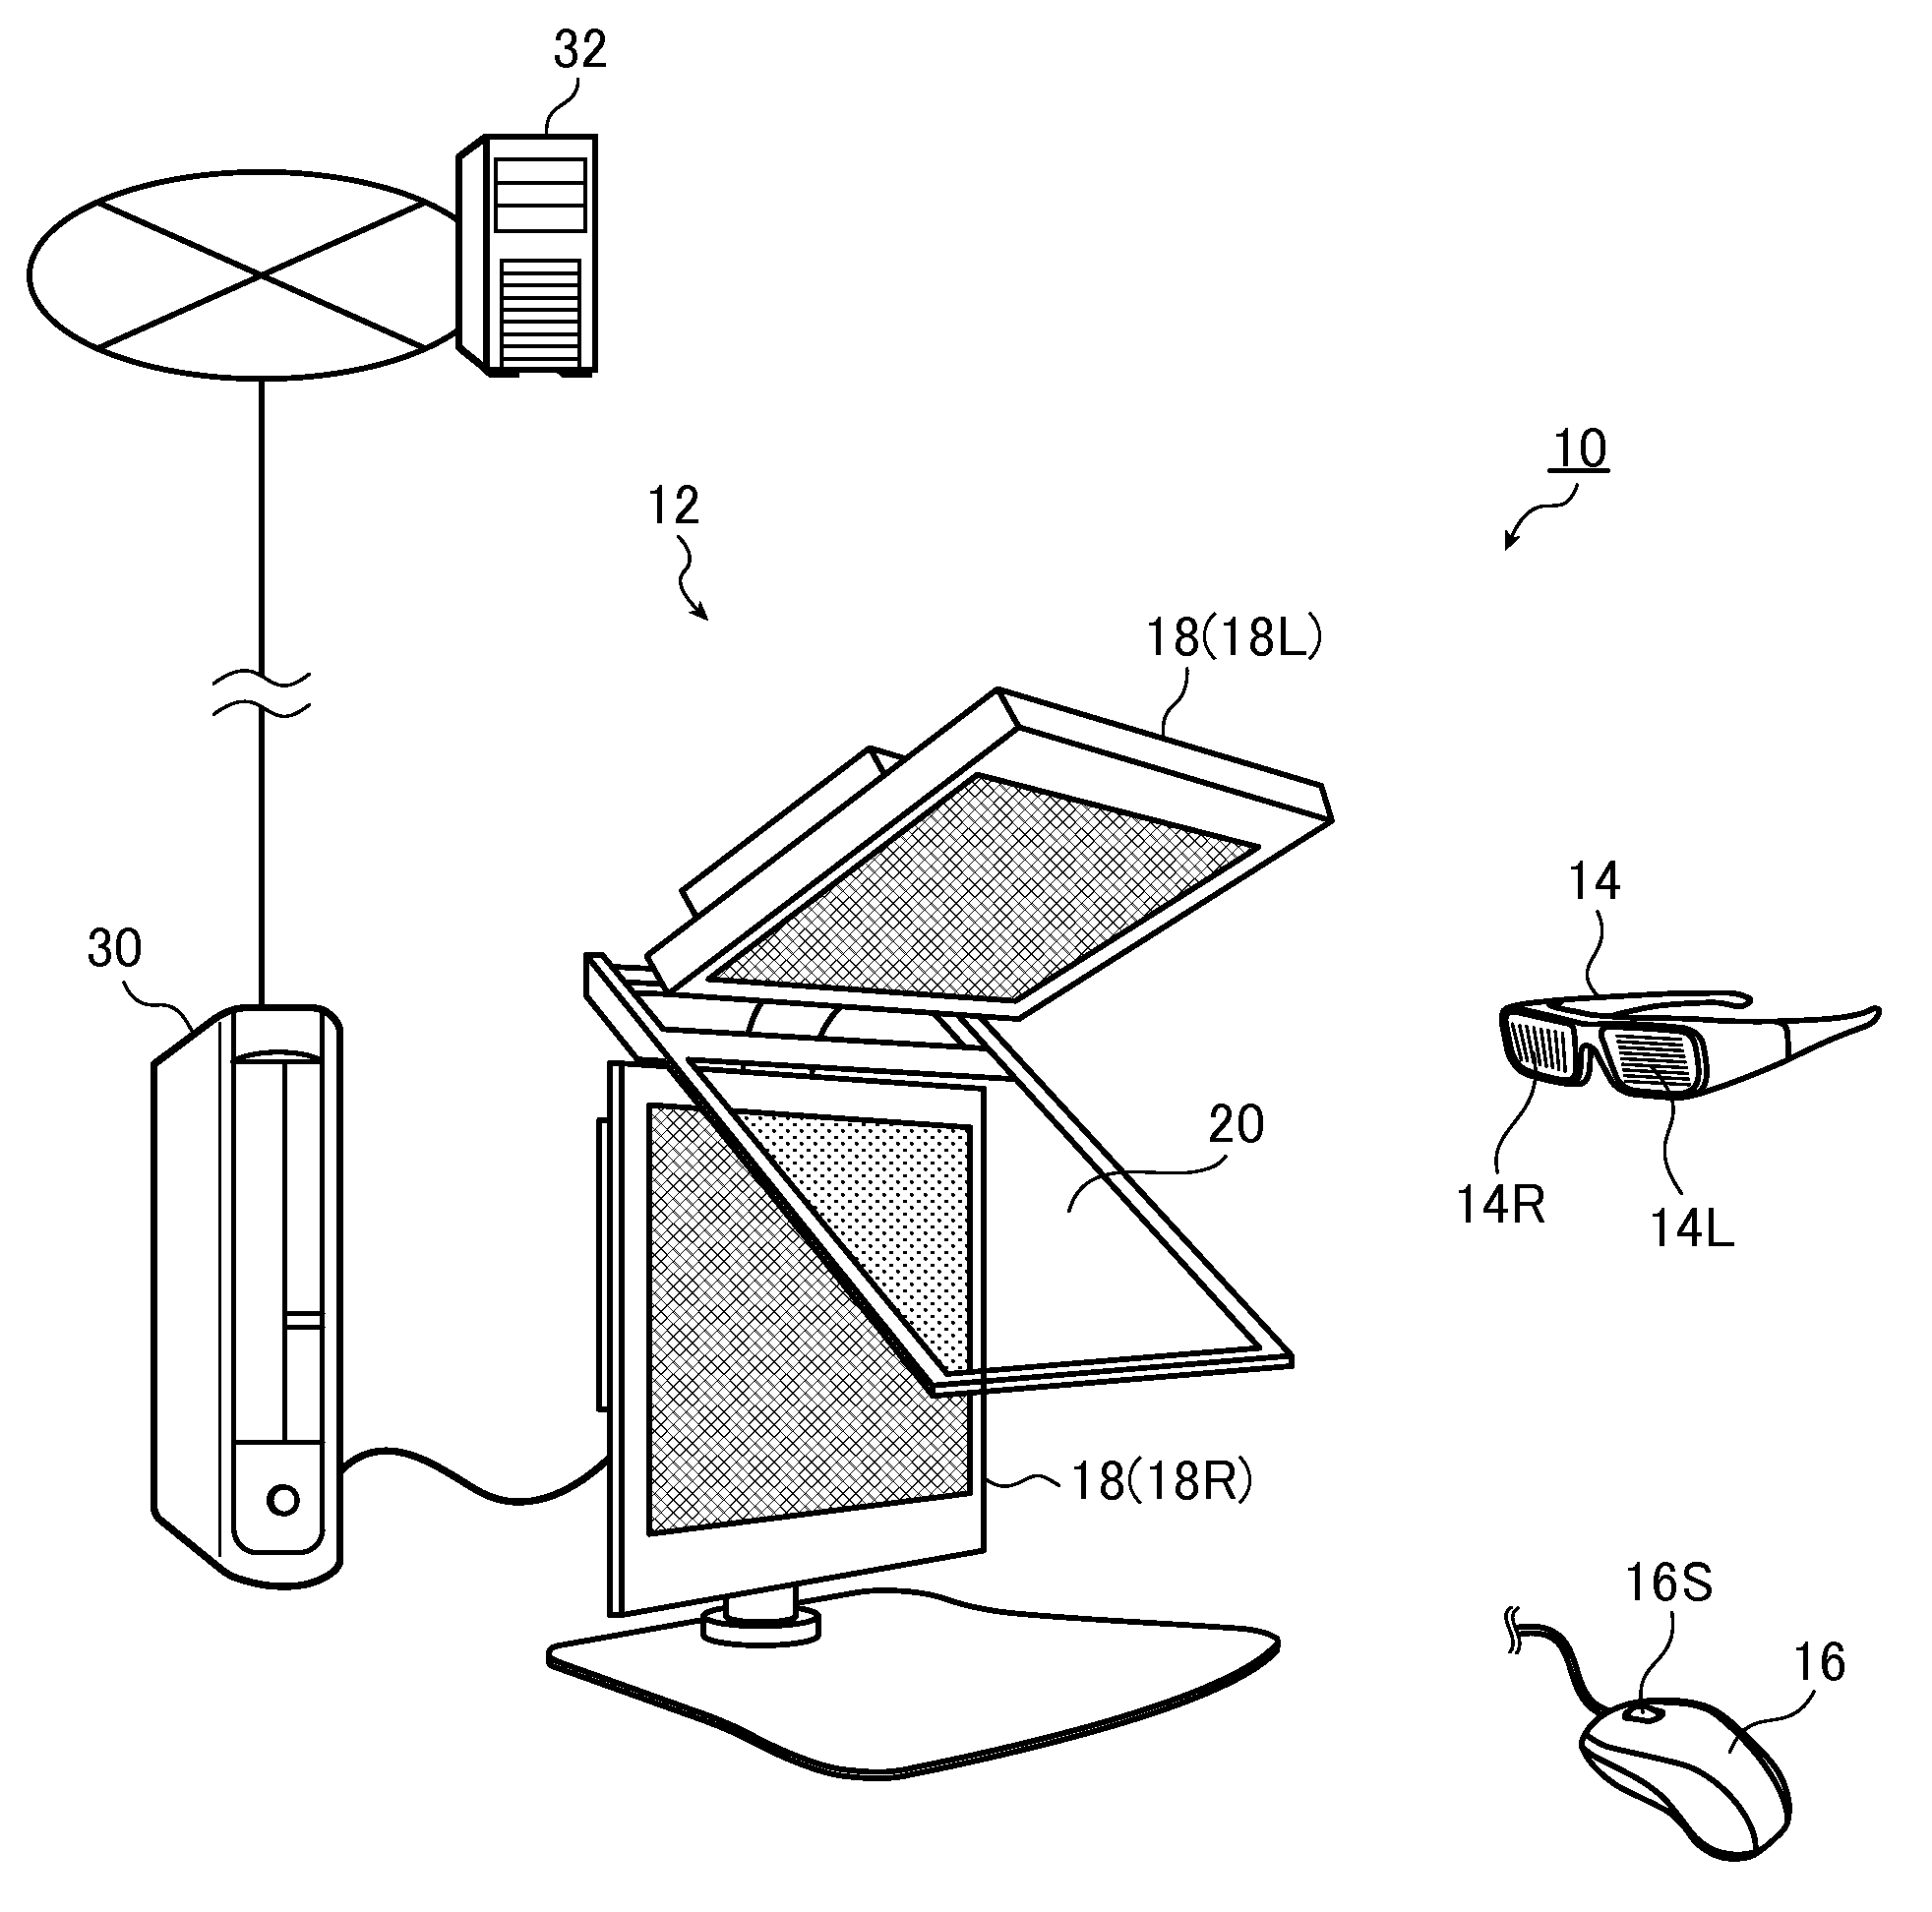 Stereoscopic display apparatus